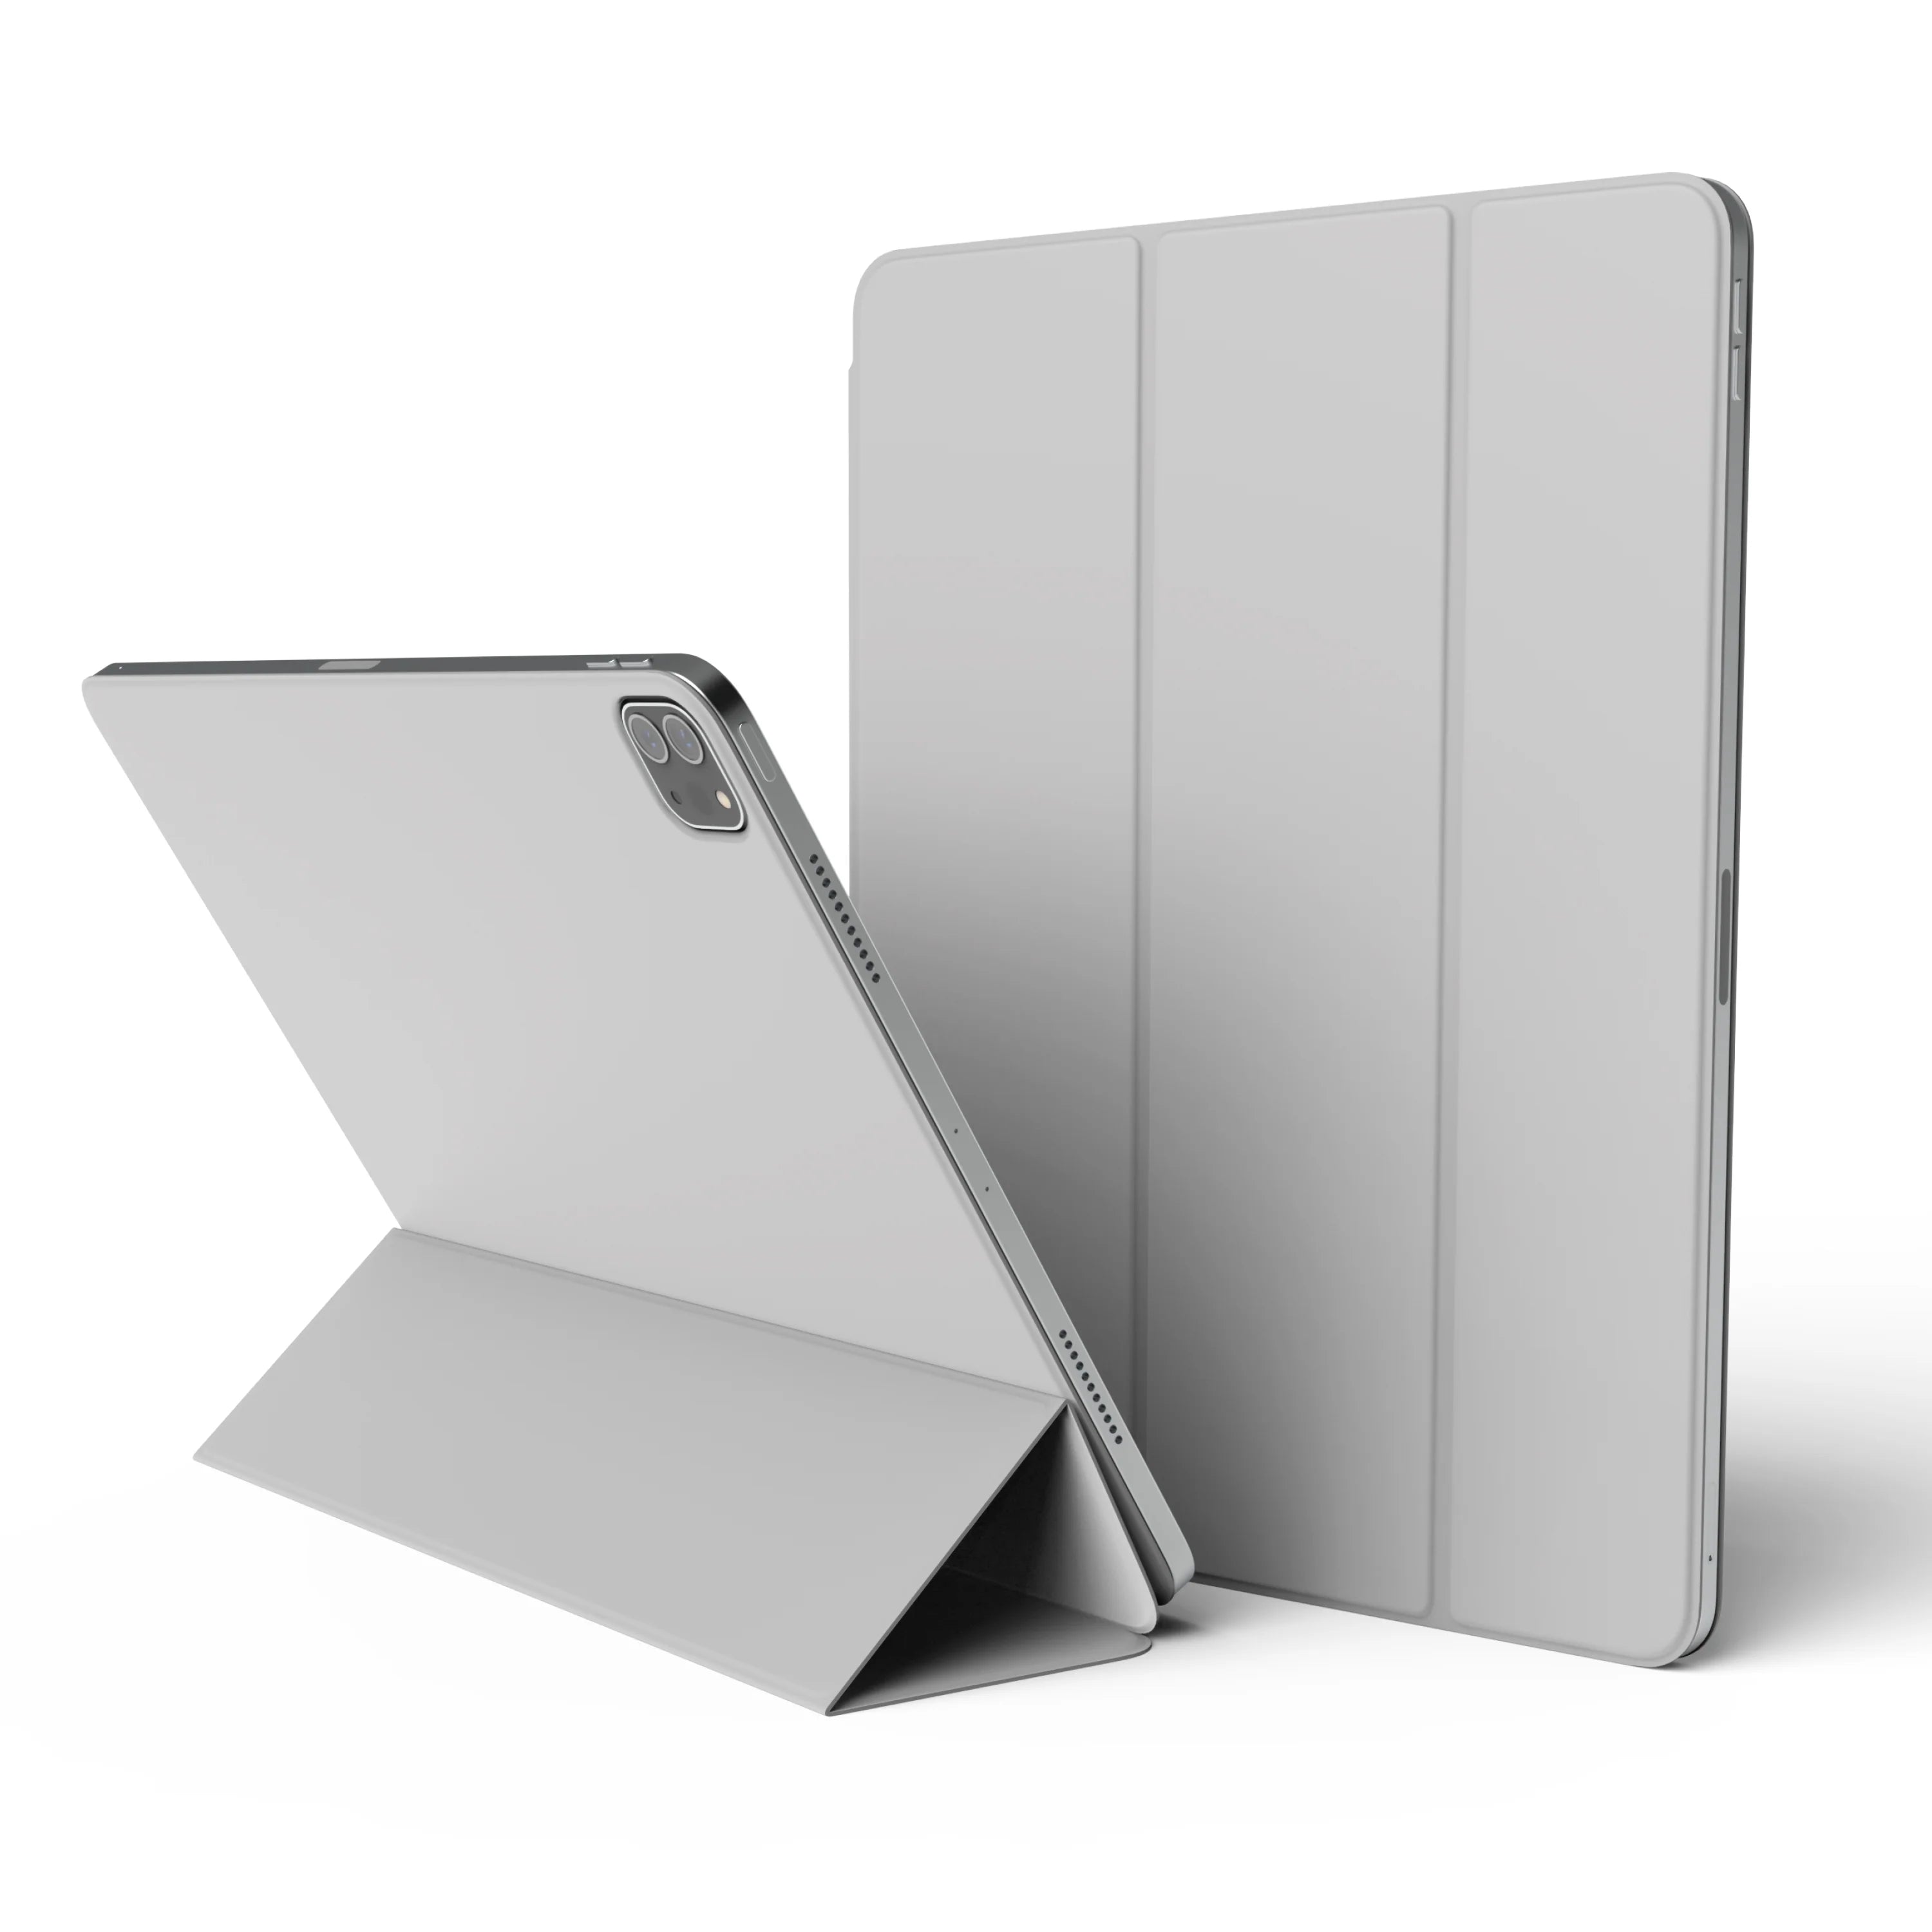 elago Magnetic Folio iPad Pro 12.9 Light Grey